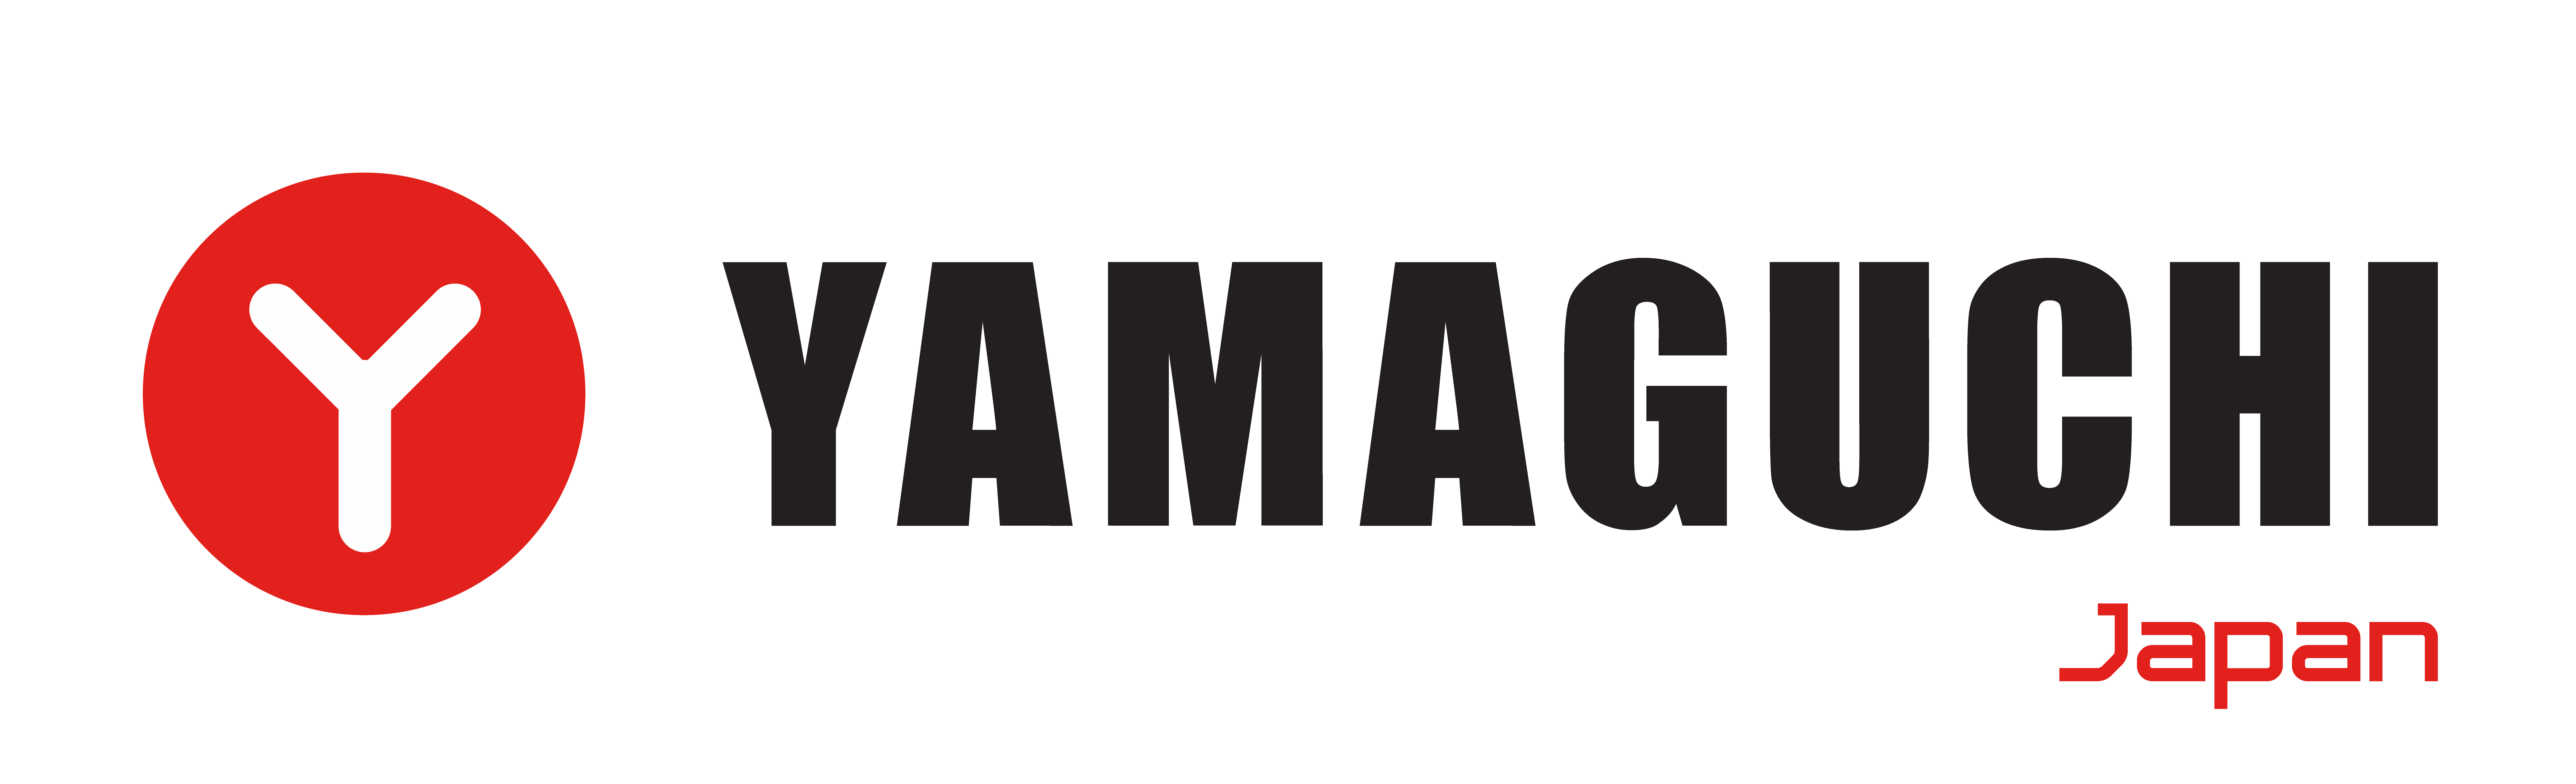 Ямогочи. Ямагучи компания. Yamaguchi logo. Ямагучи надпись. Ямогучий реклама.